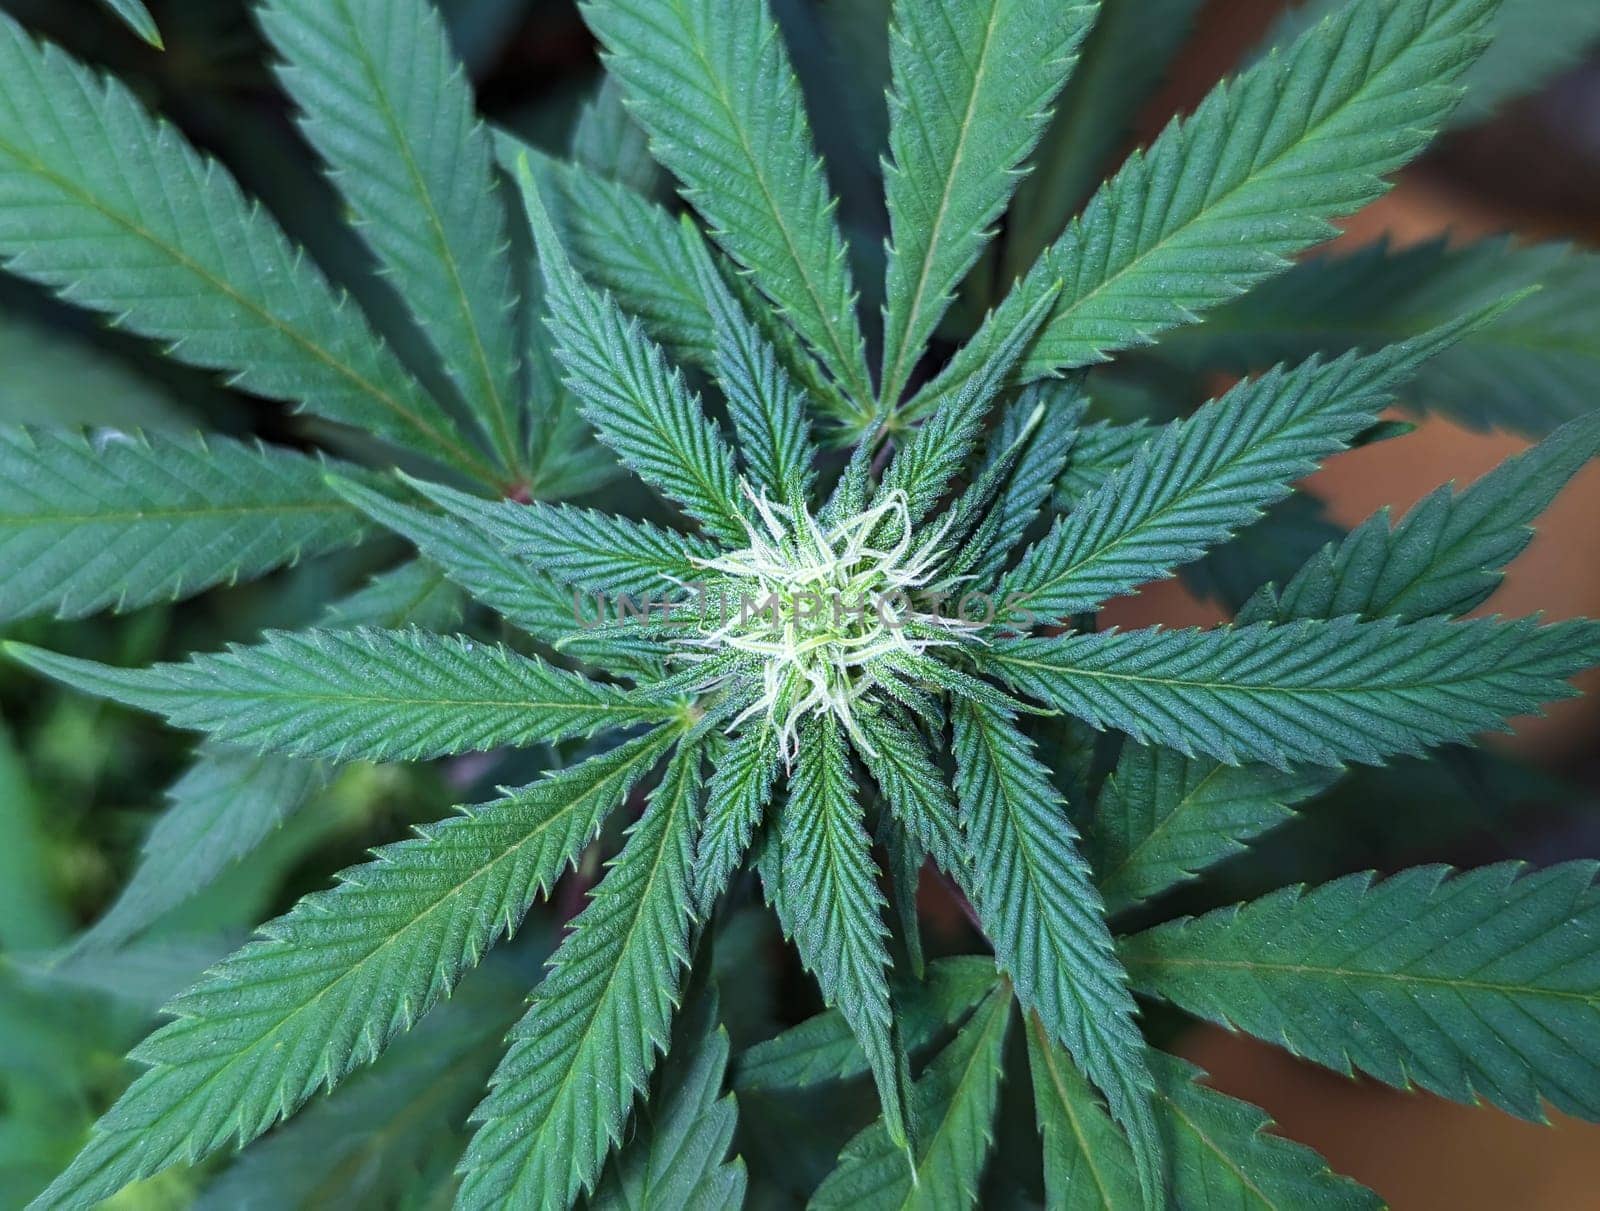 Cannabis close up view, weed background, growing marijuana indoor by jackreznor